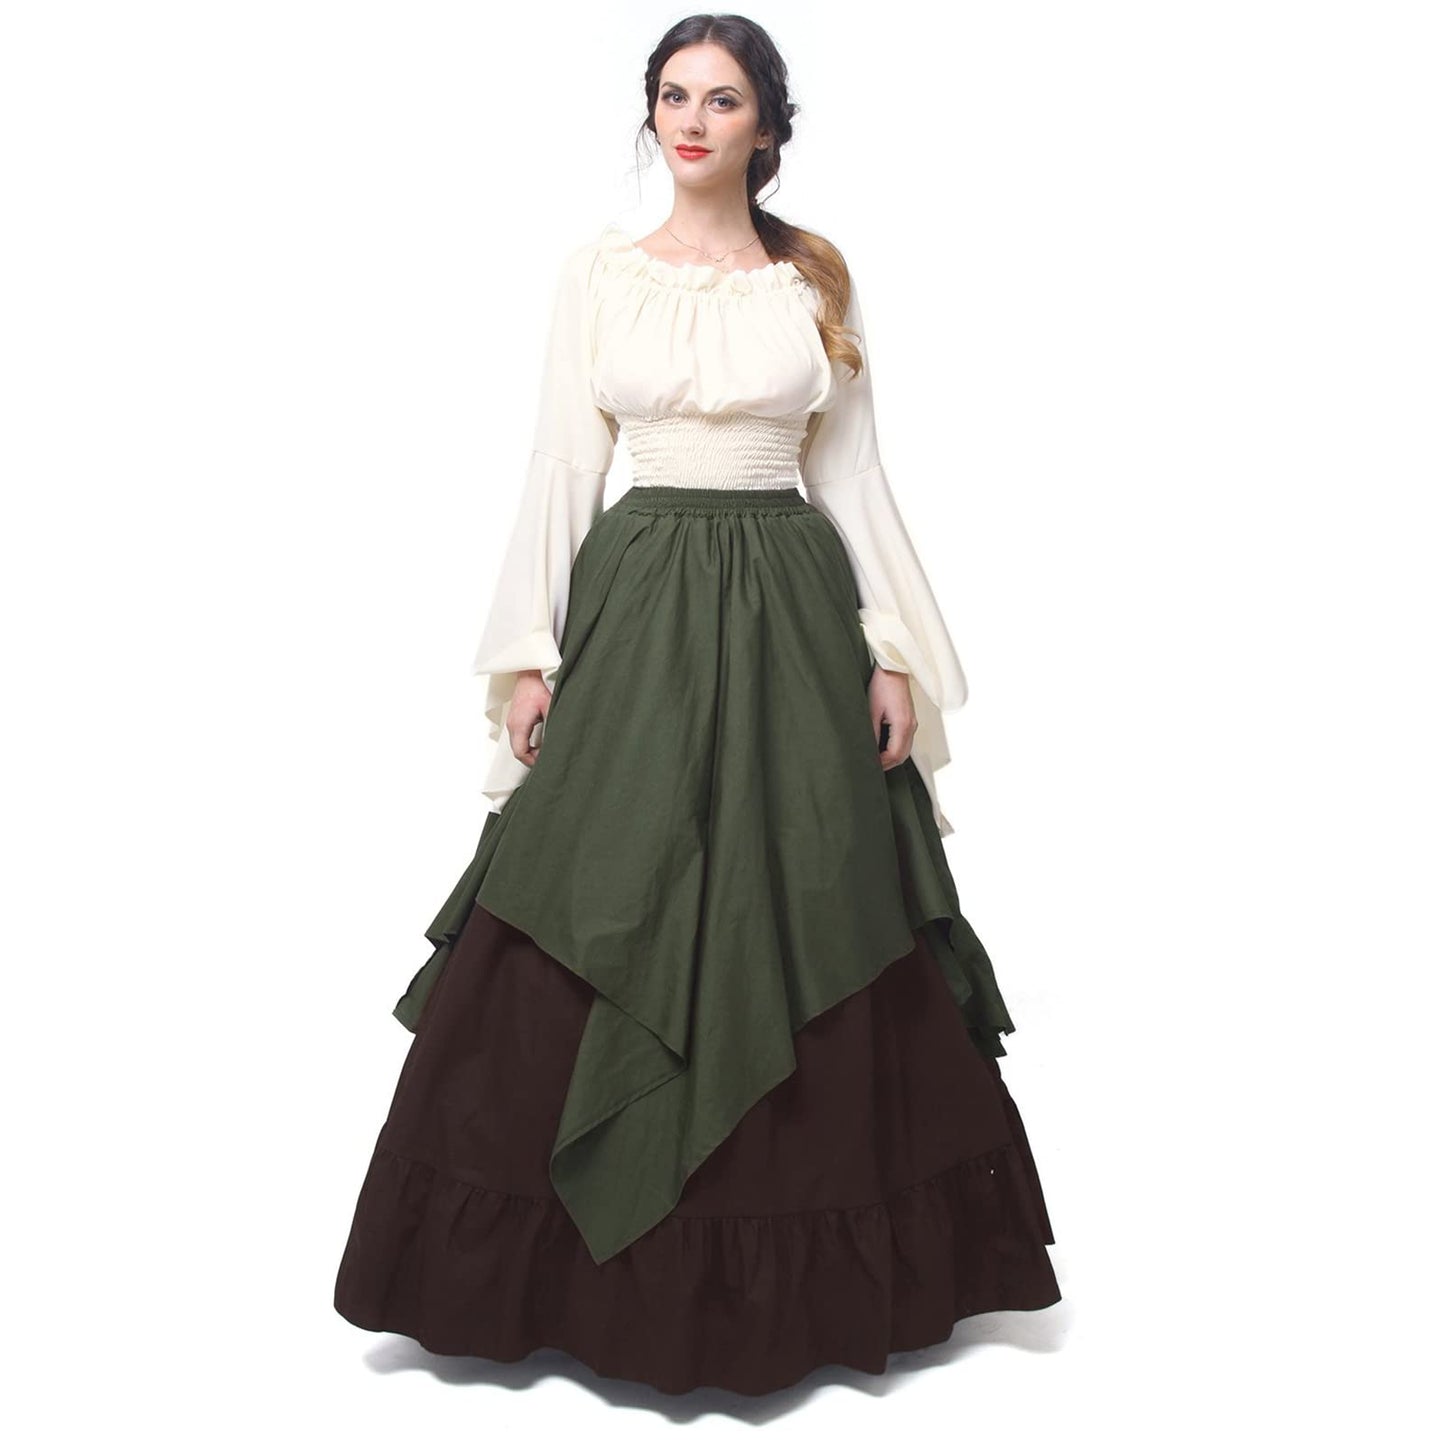 NSPSTT Womens Renaissance Medieval Costume Victorian Dresses Gown Scottish Dress